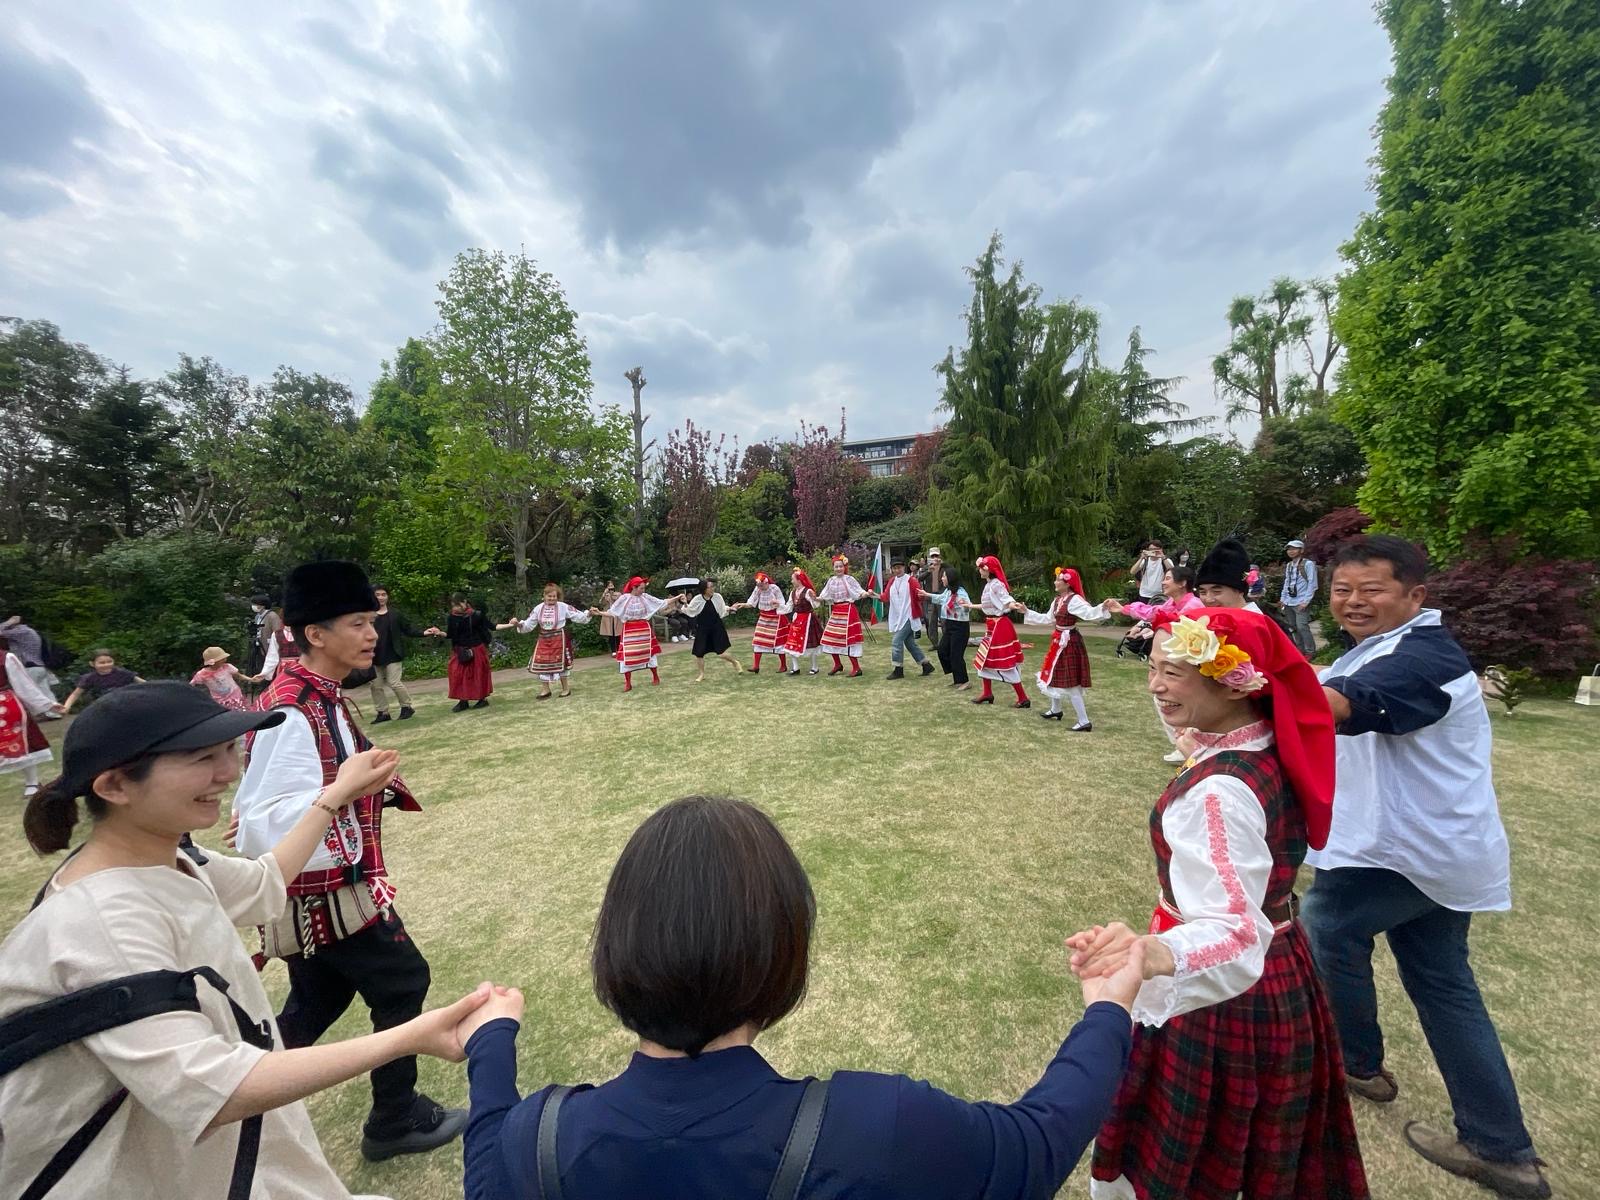 Български фестивал в “Yokohama English Garden"